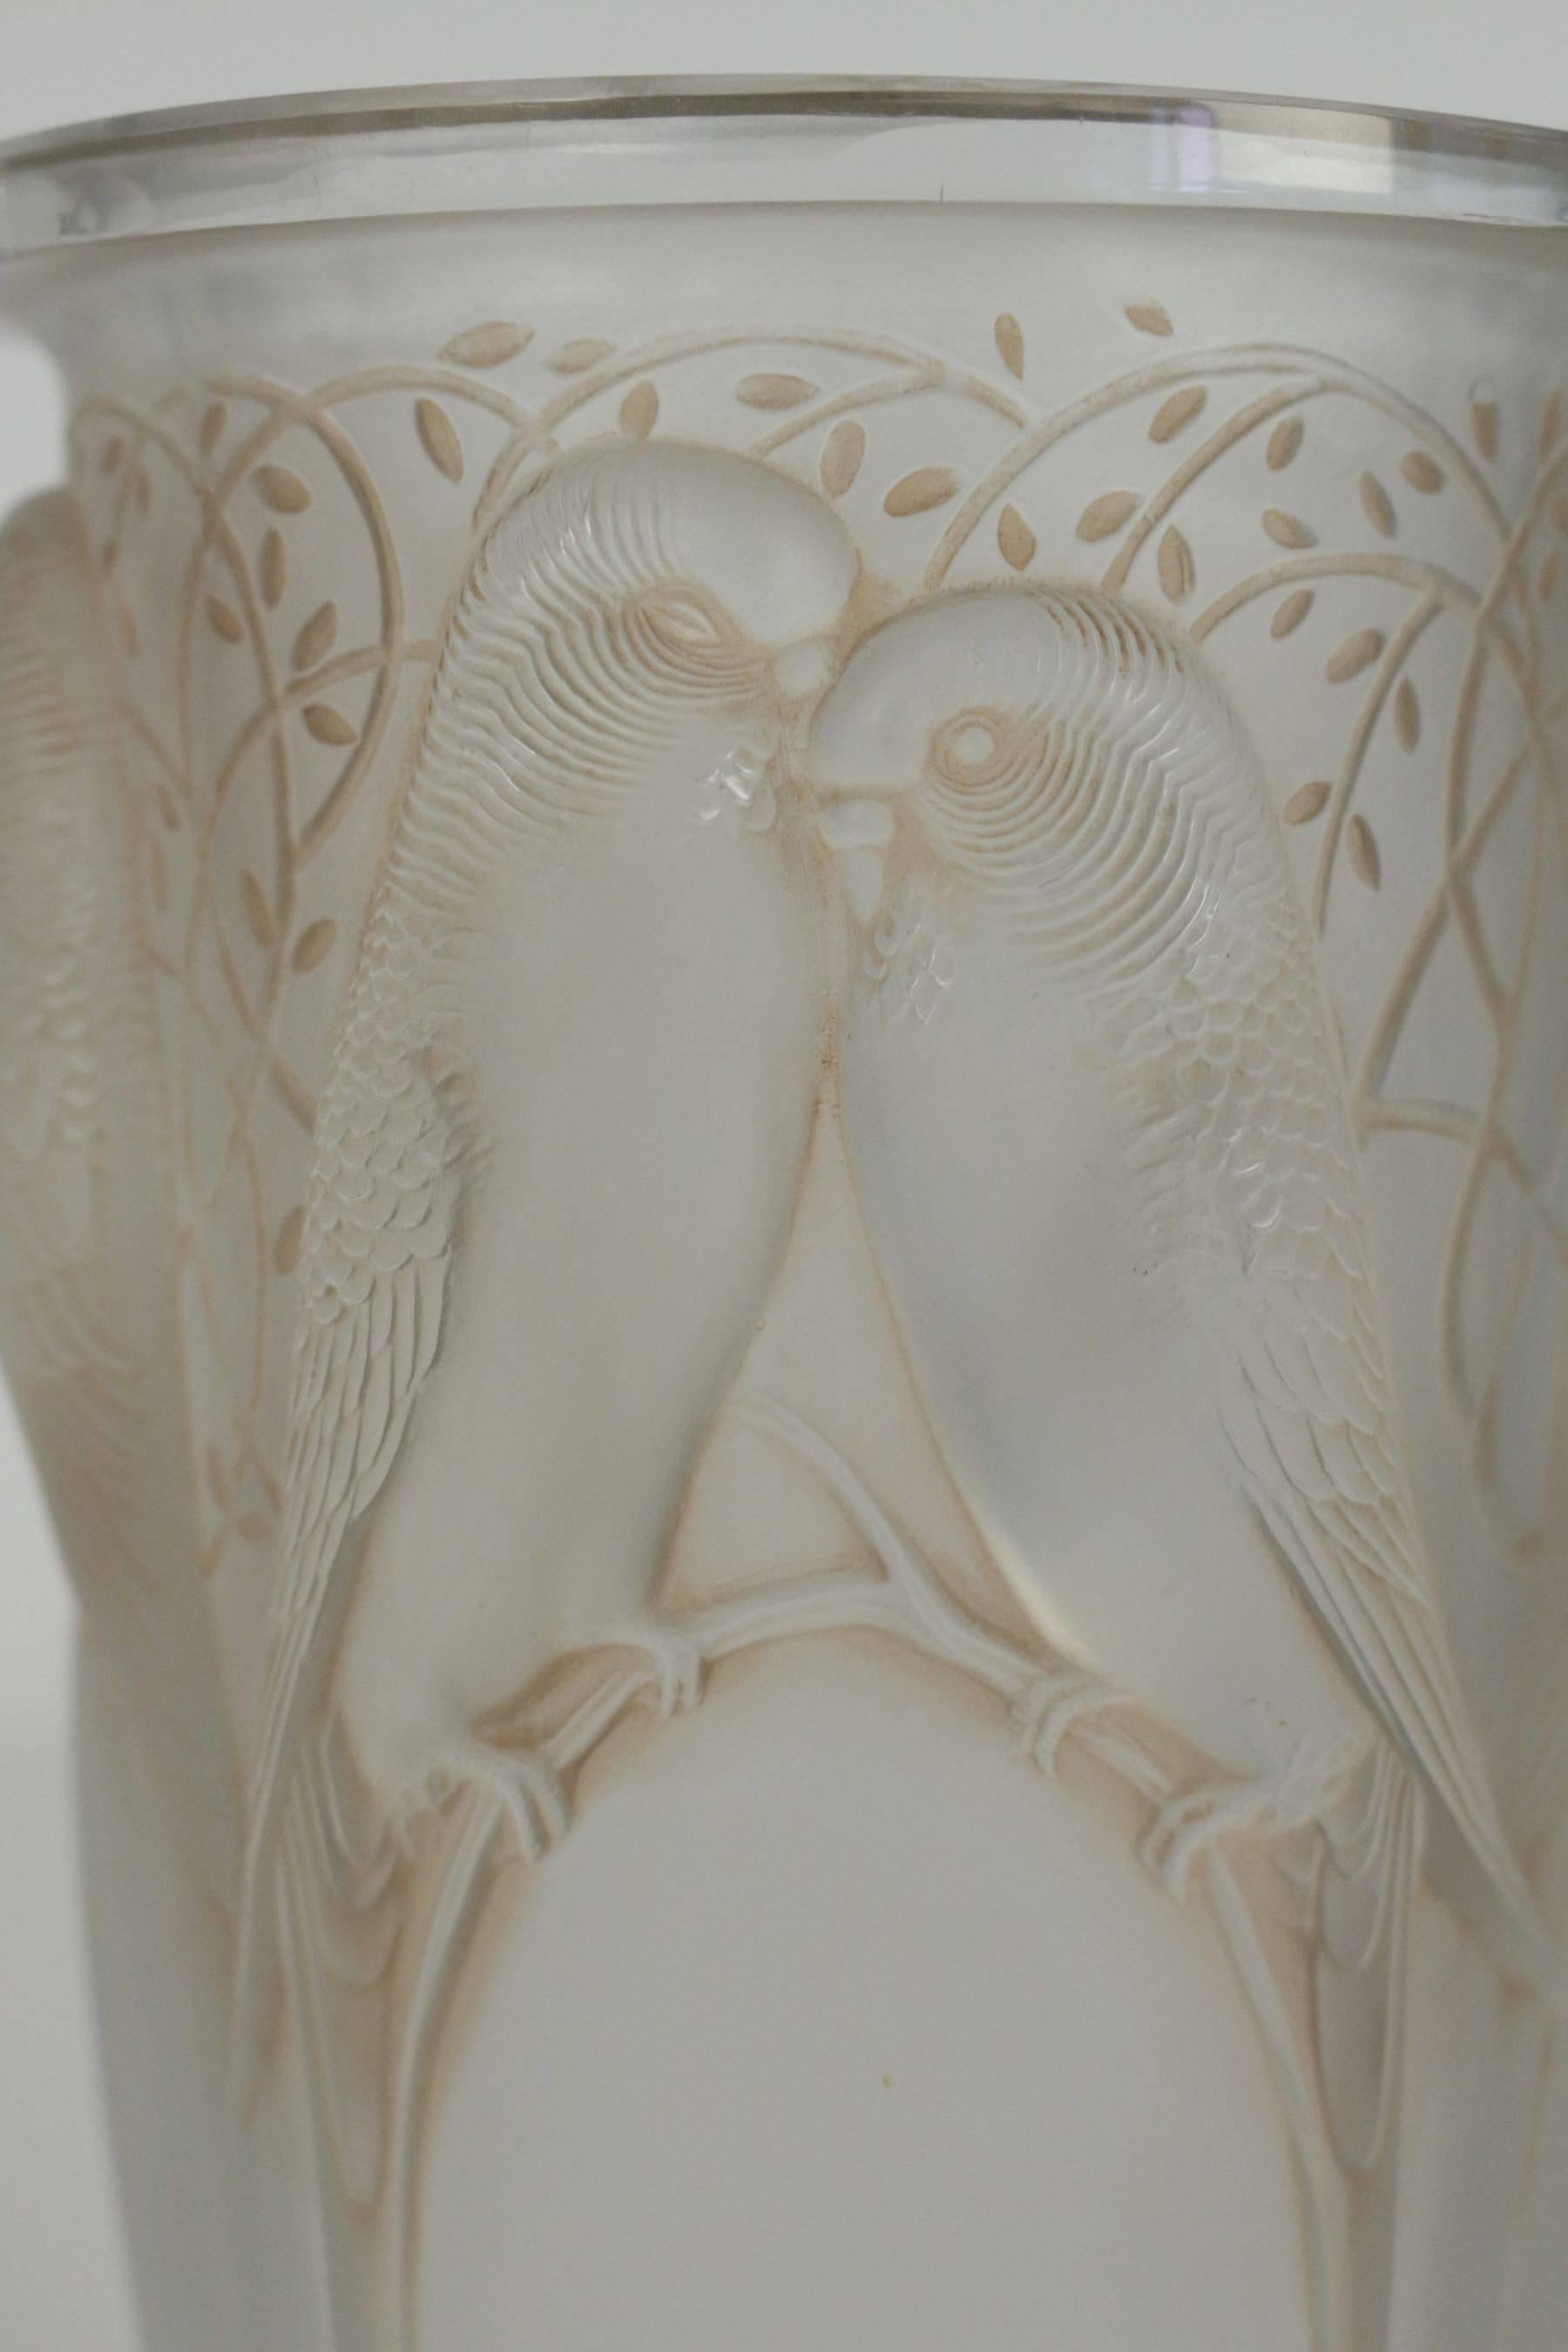 René Lalique (1860-1945.)
Vase 